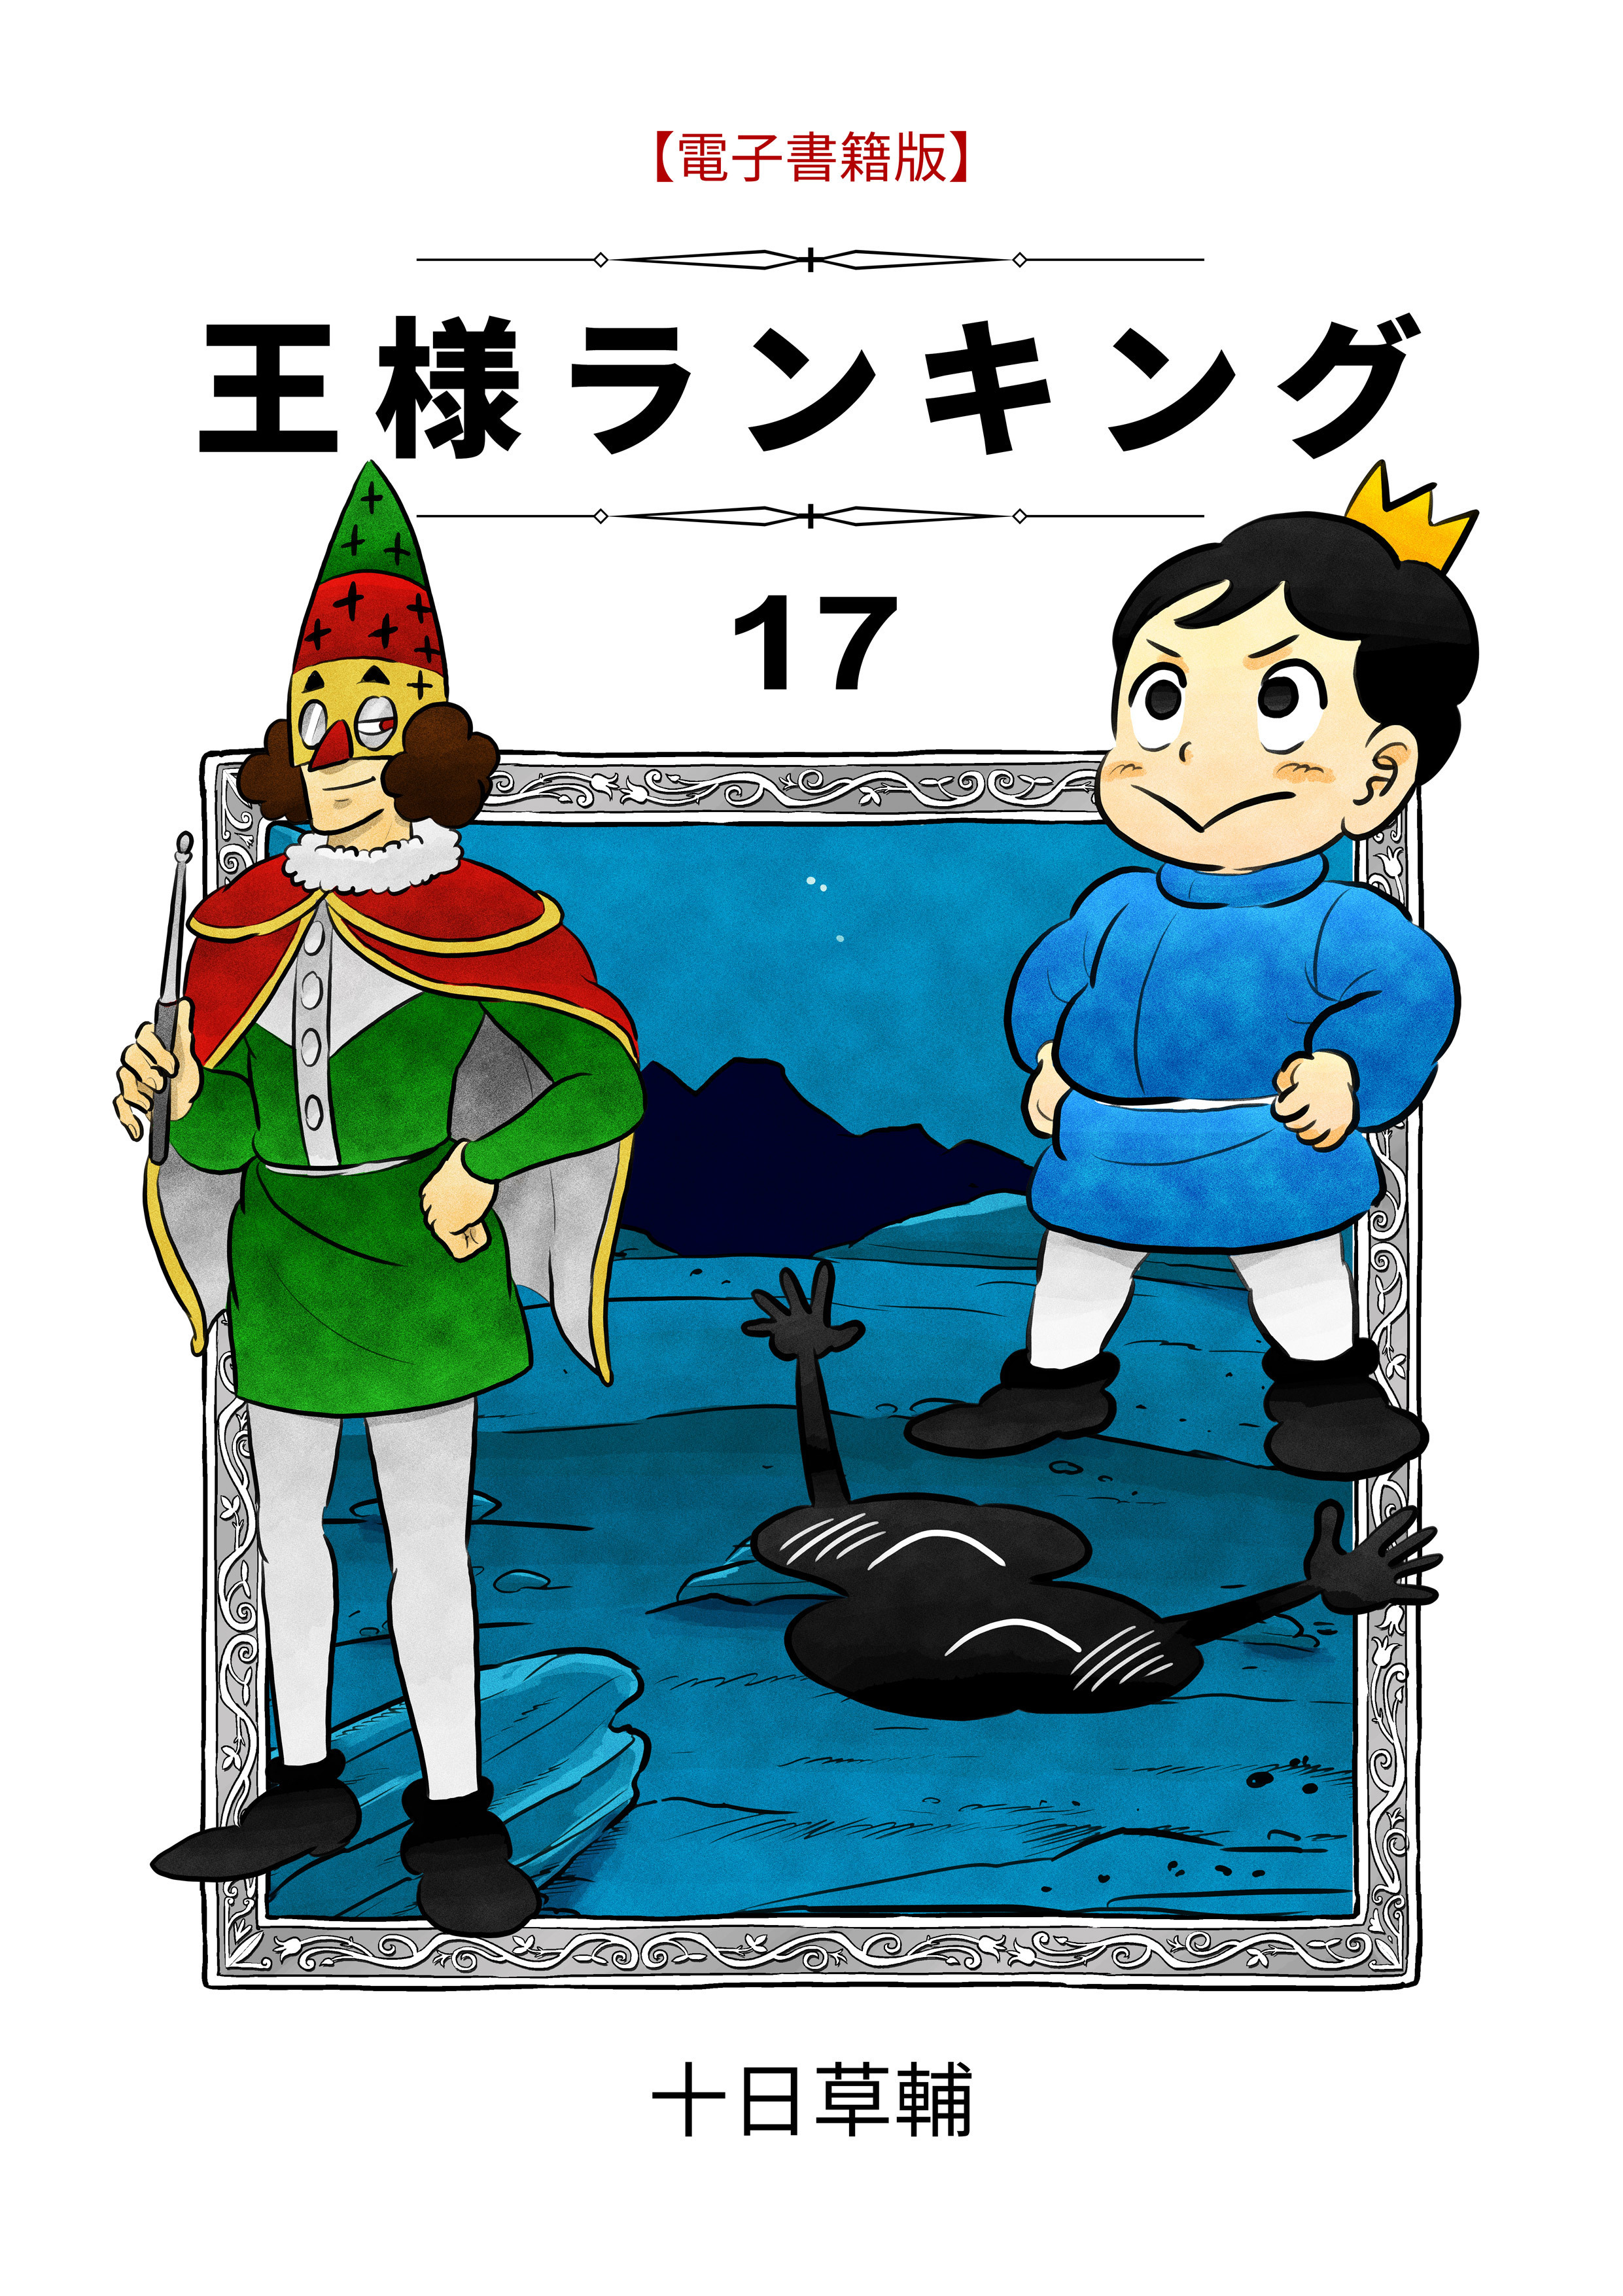 Read Ousama Ranking Vol.1 Chapter 5 on Mangakakalot